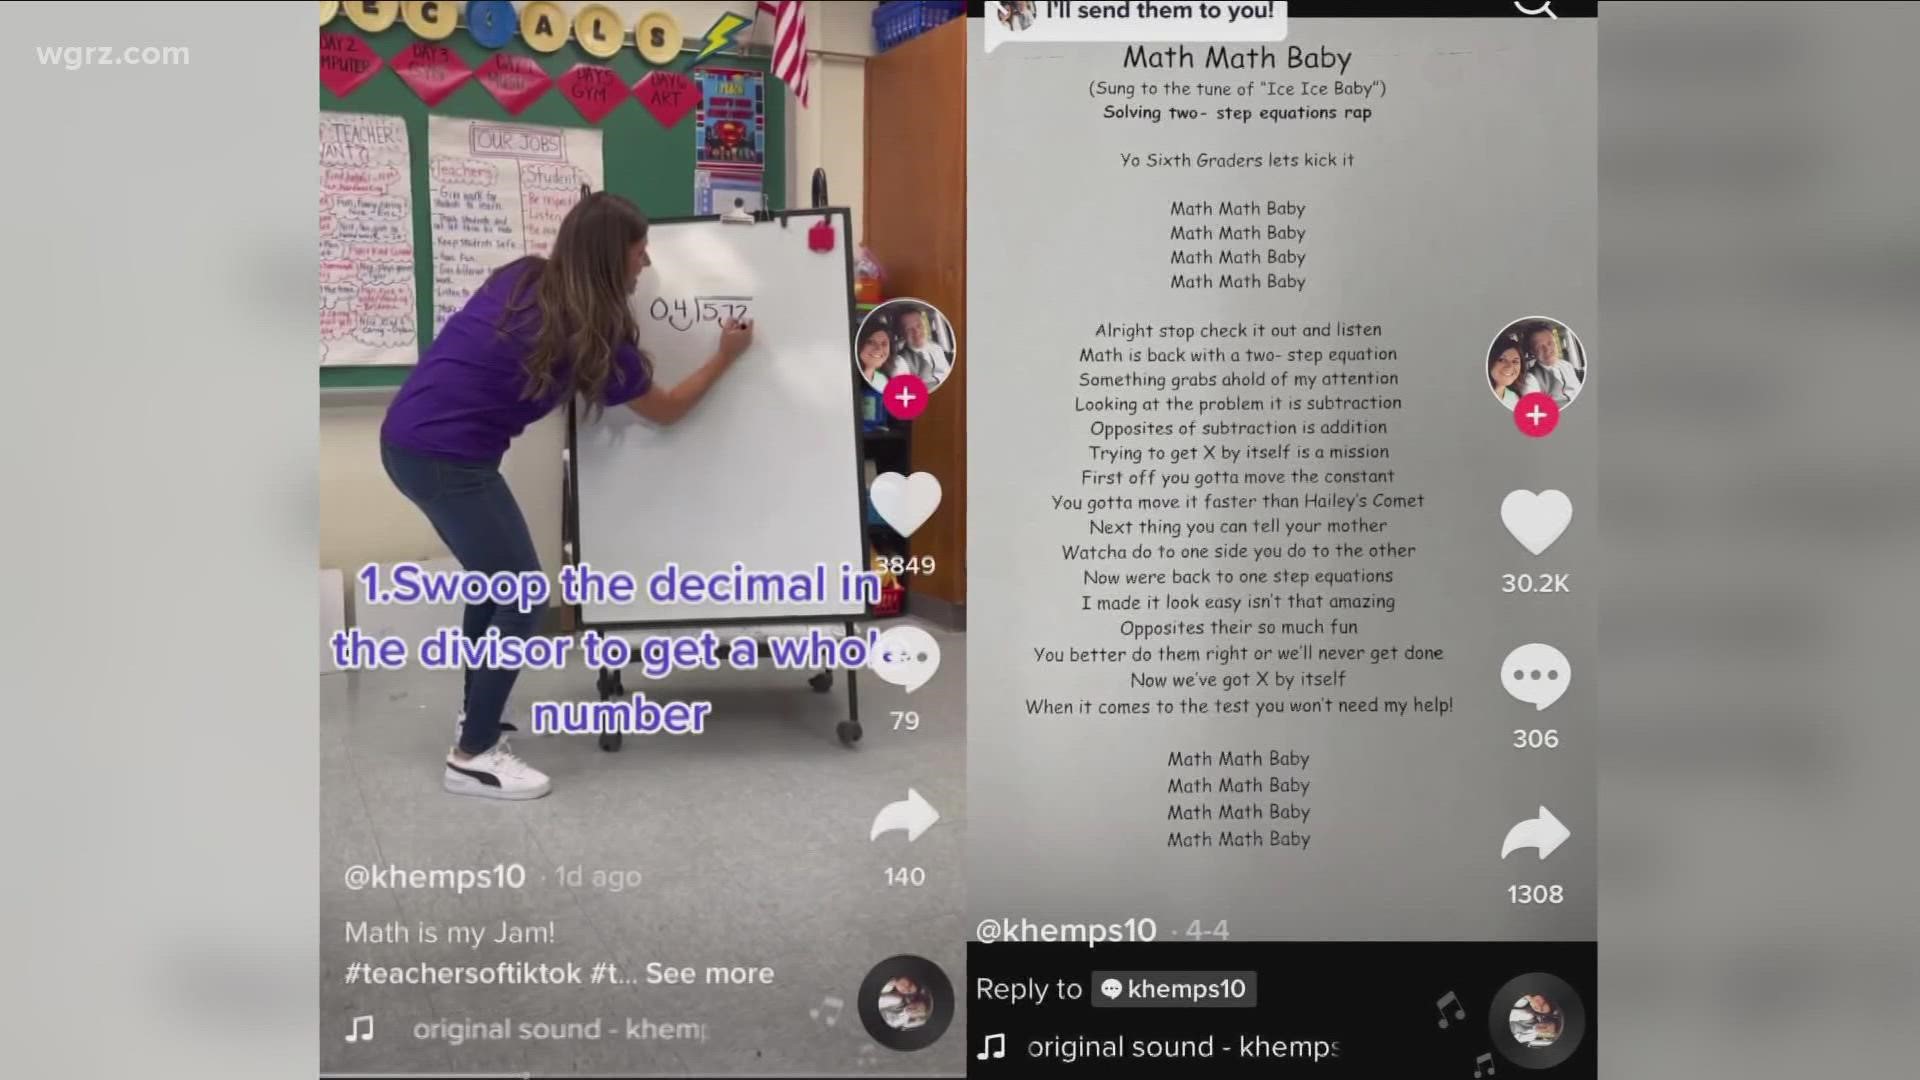 A North Tonawanda math teacher has gone viral with her epic math raps.